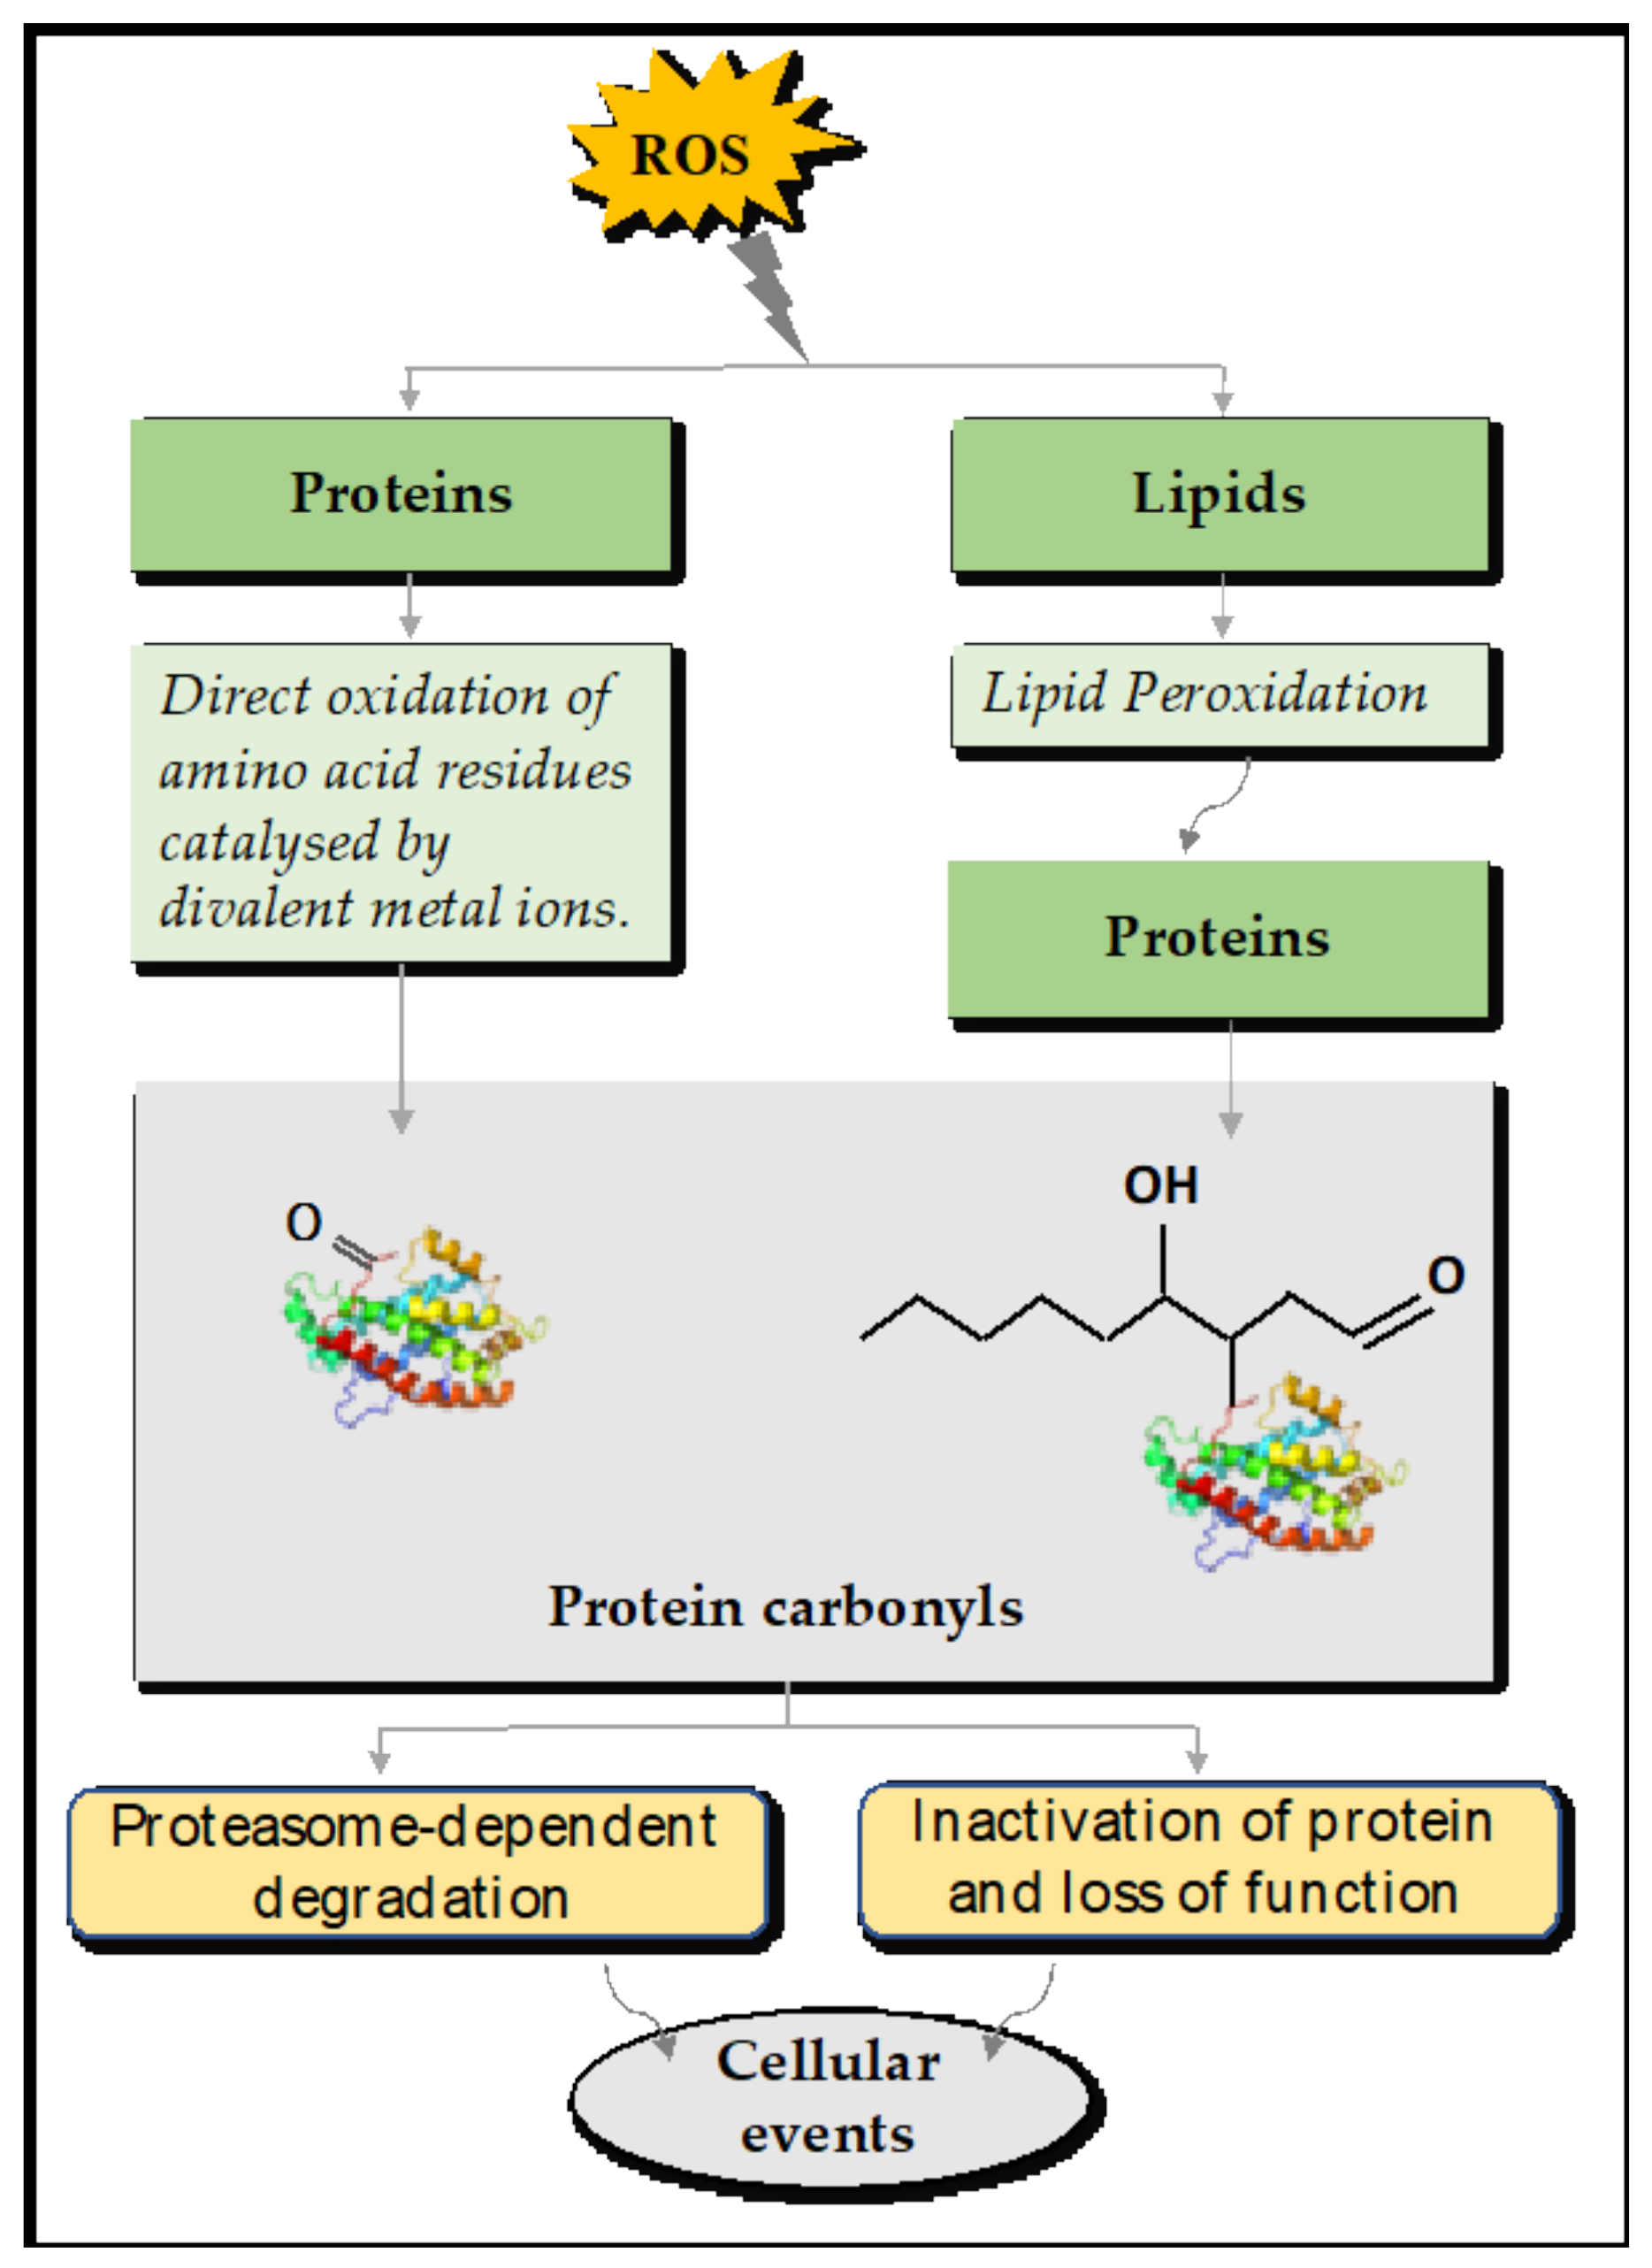 protein carbonyl